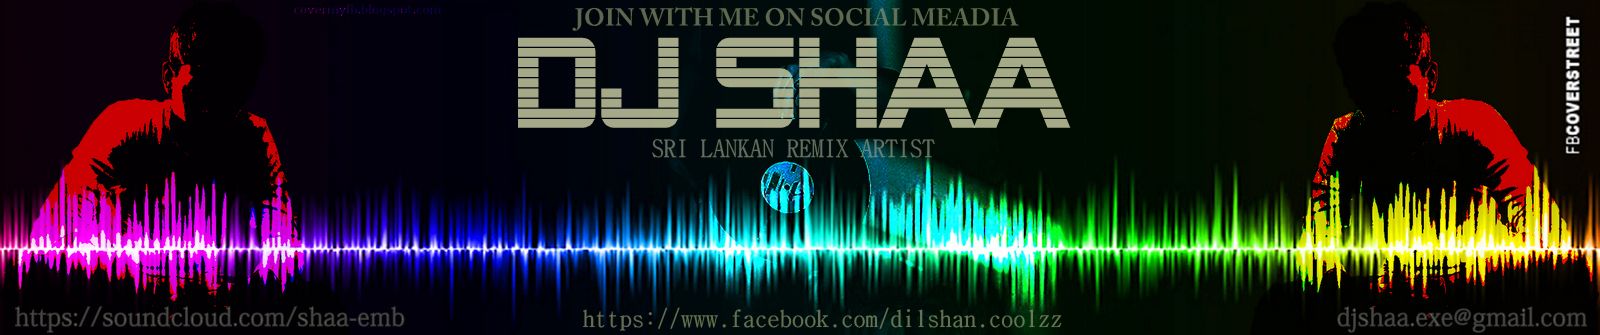 Stream Mana Bandu Remix - Lahiru Perera ft. Anushka Udana by Dj Shaa EMB |  Listen online for free on SoundCloud